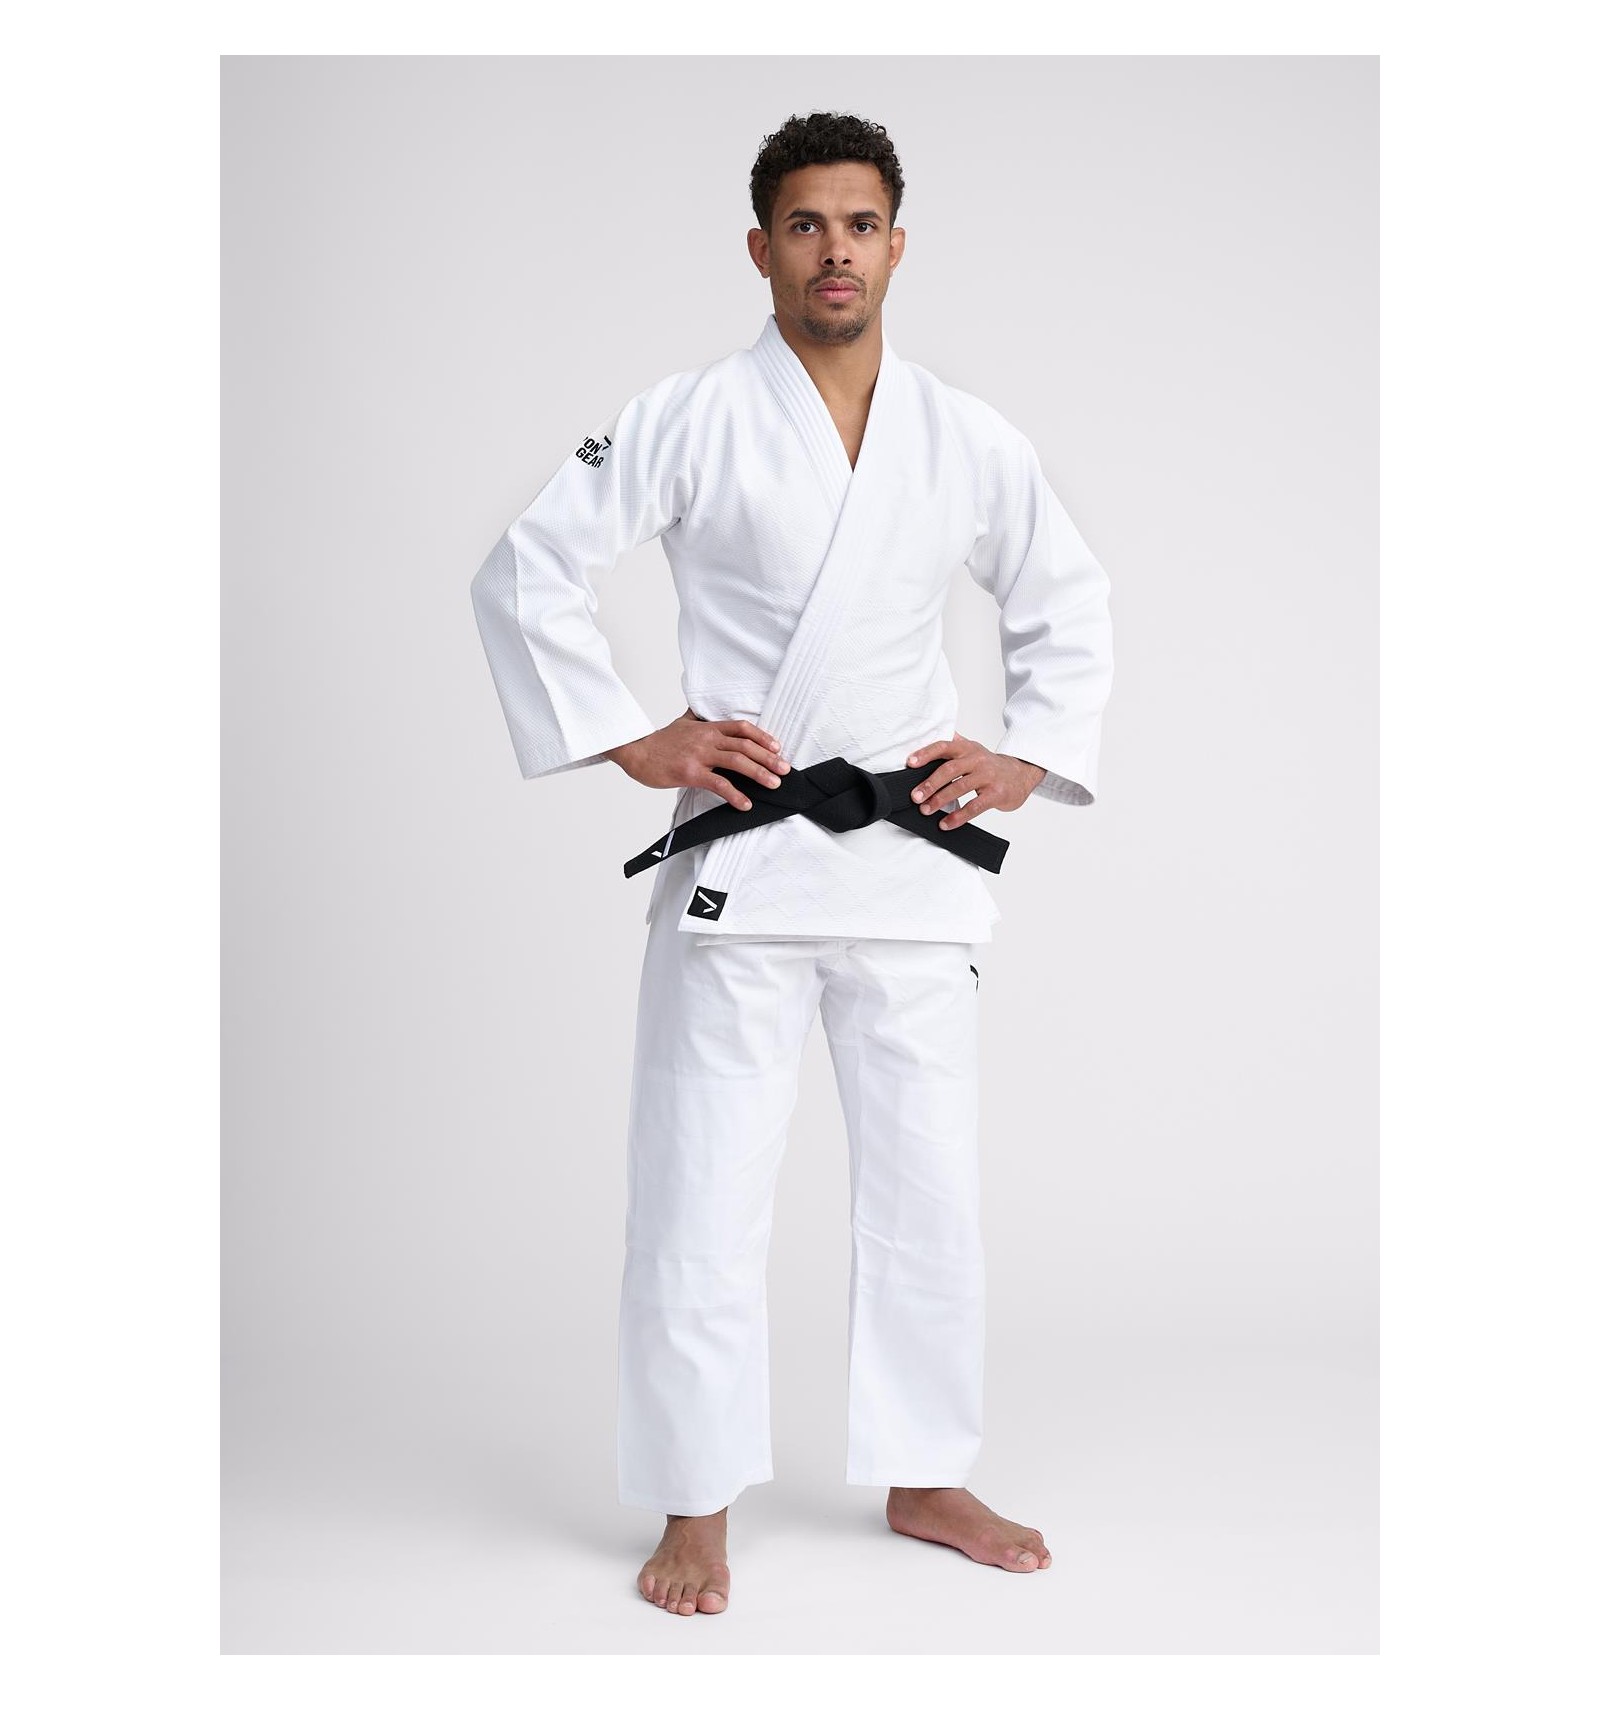 Acusador hoja Altoparlante IPPON GEAR Basic 2 Judo Uniform